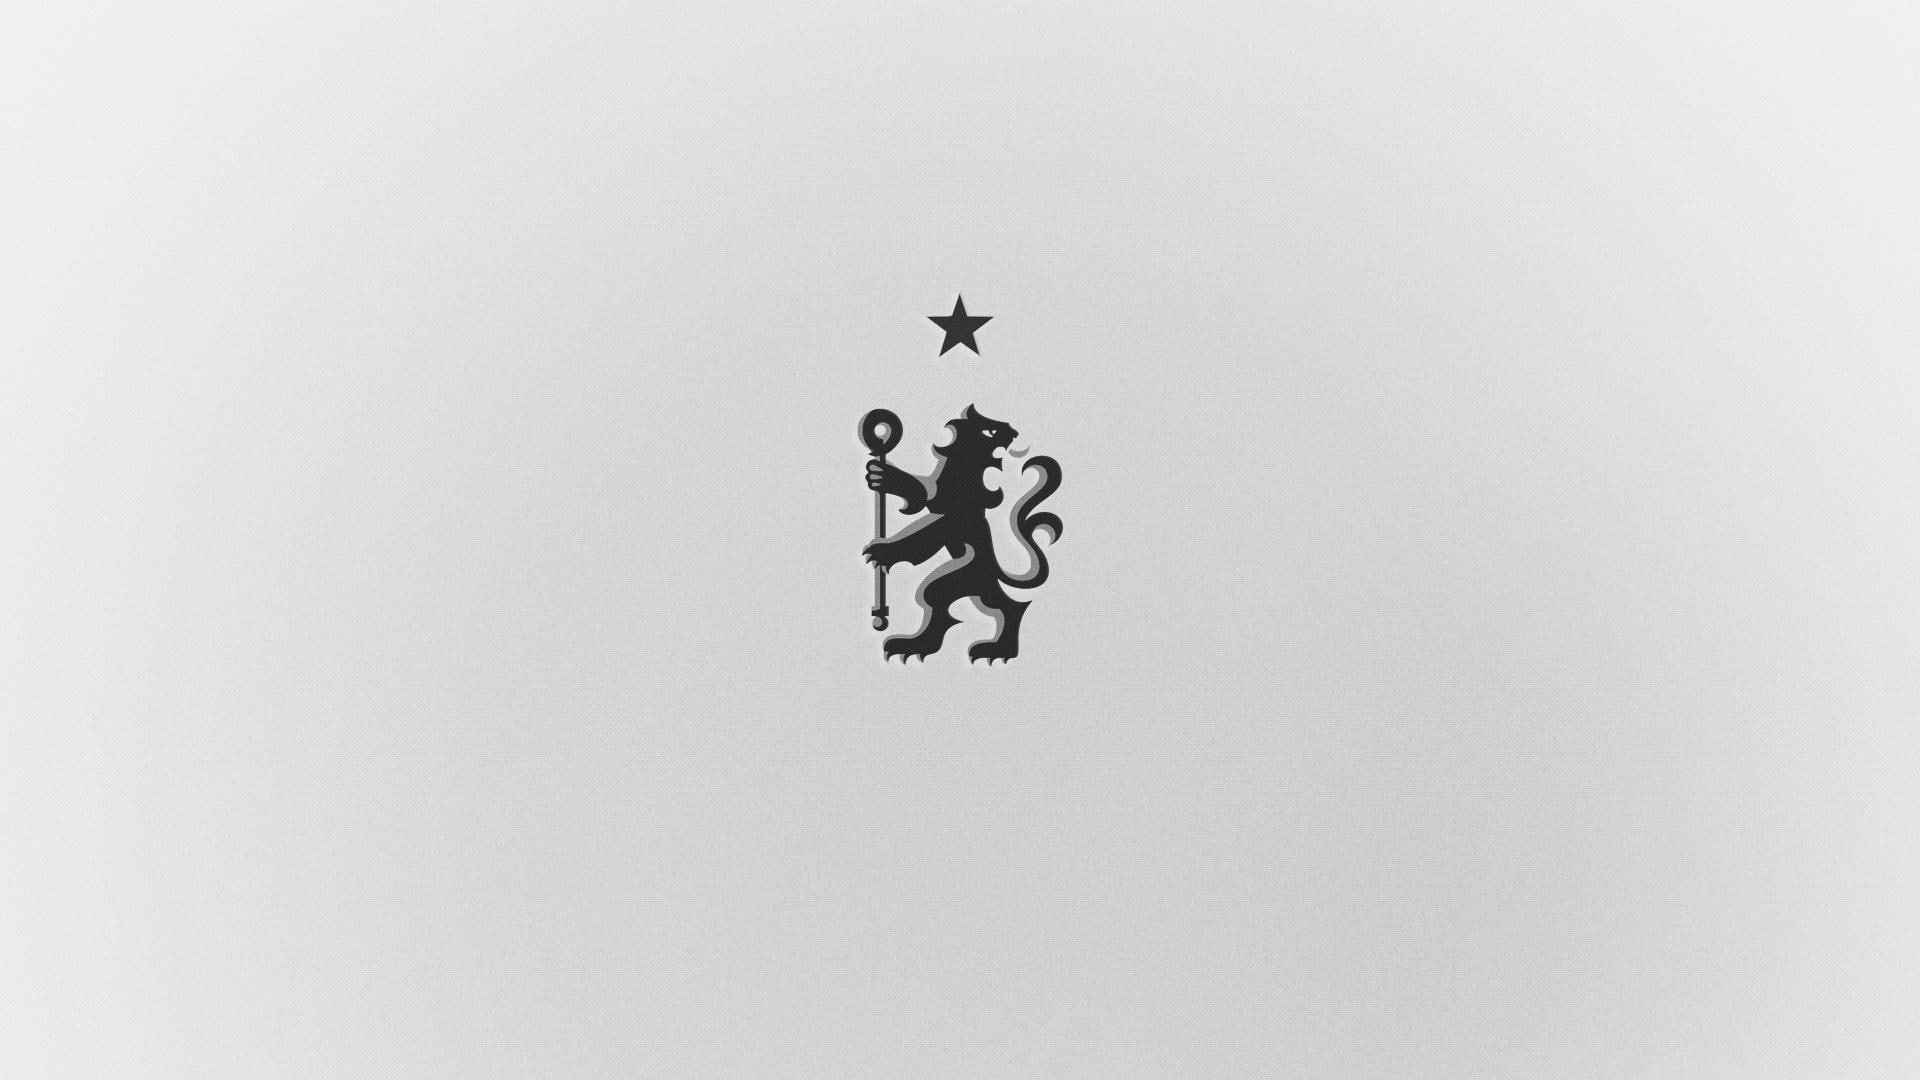 Chelsea, Chelsea FC, England, sign, communication, direction